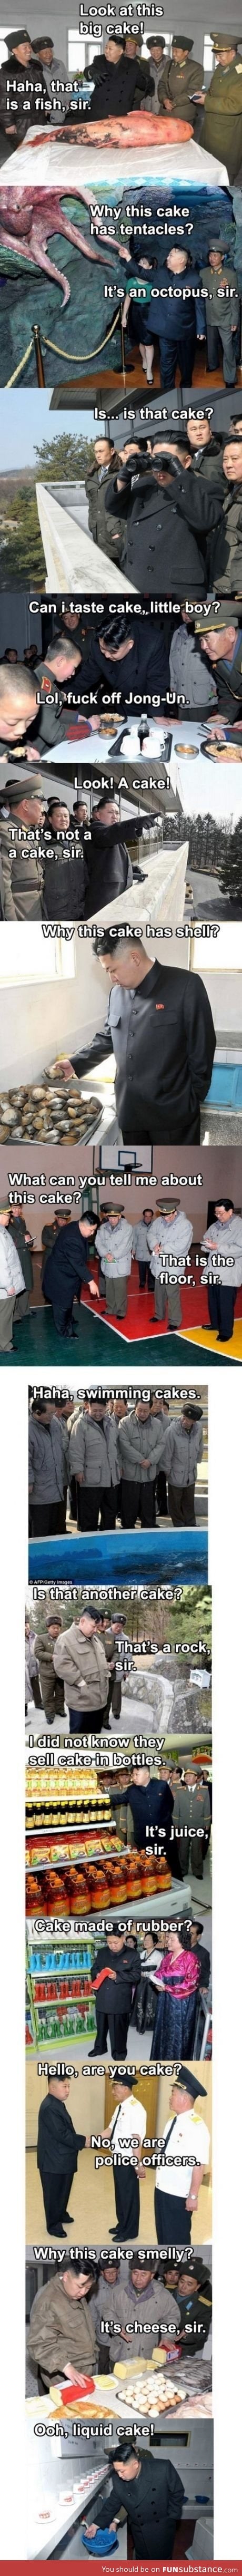 Kim Jon Un likes cake